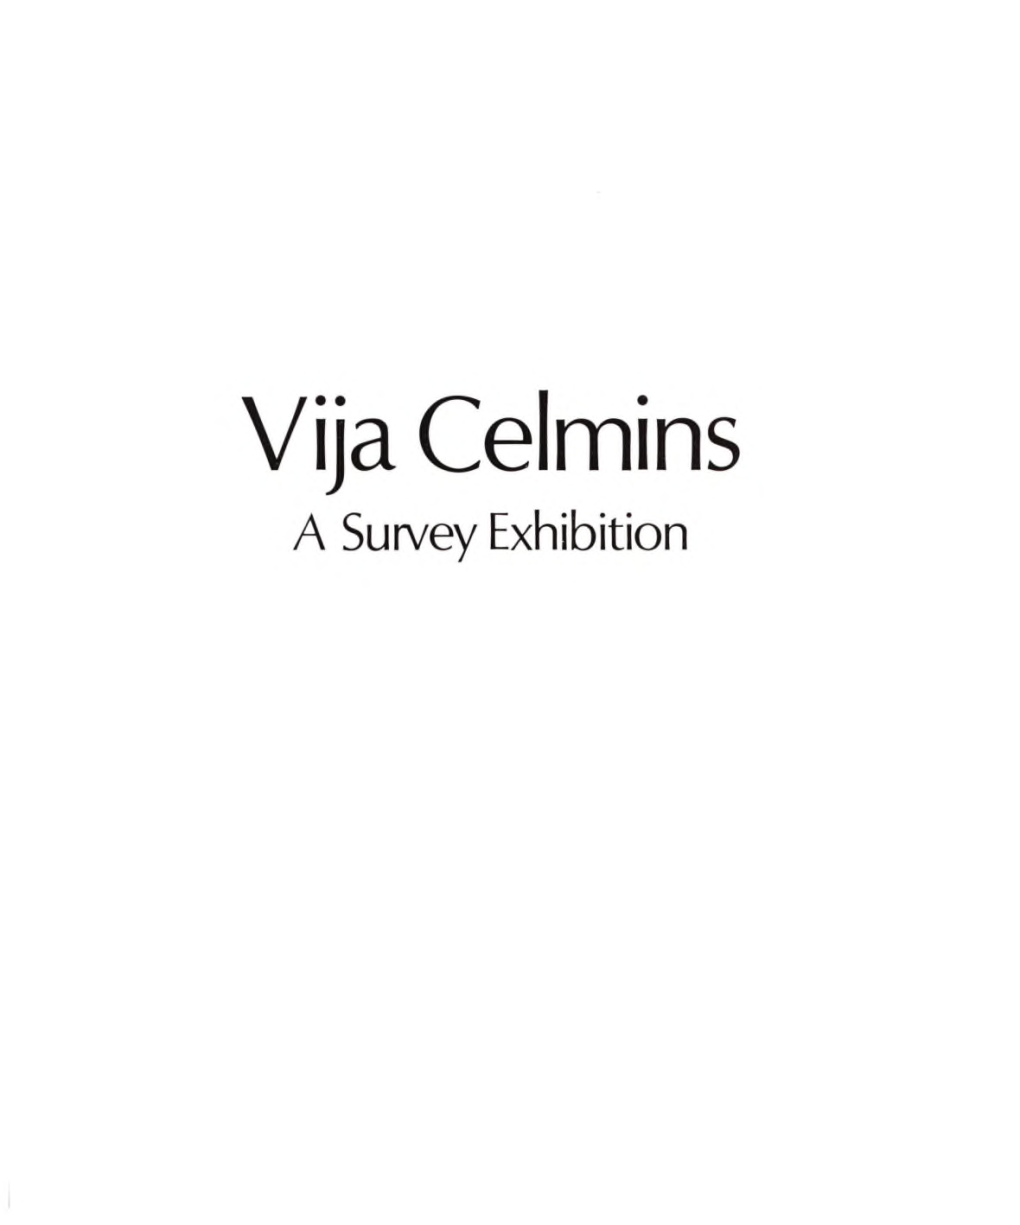 Vija Celmins a Suivey Exhibition Vija Celmins, 1977 Photograph by Mimi Jacobs Vija Celmins a Survey Exhibition